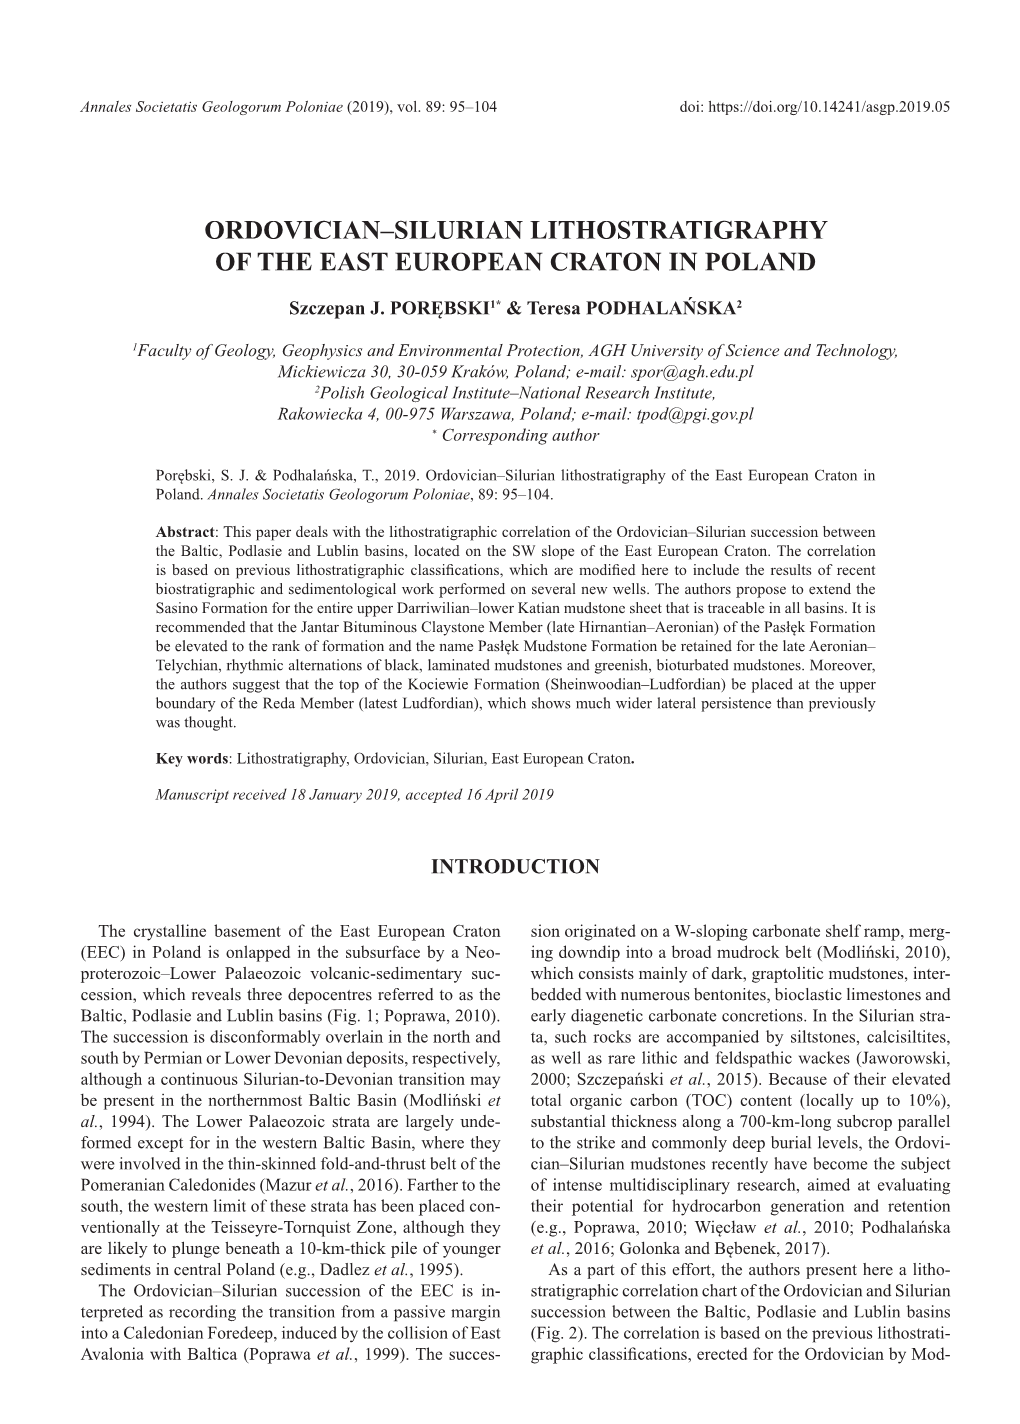 Ordovician–Silurian Lithostratigraphy of the East European Craton in Poland